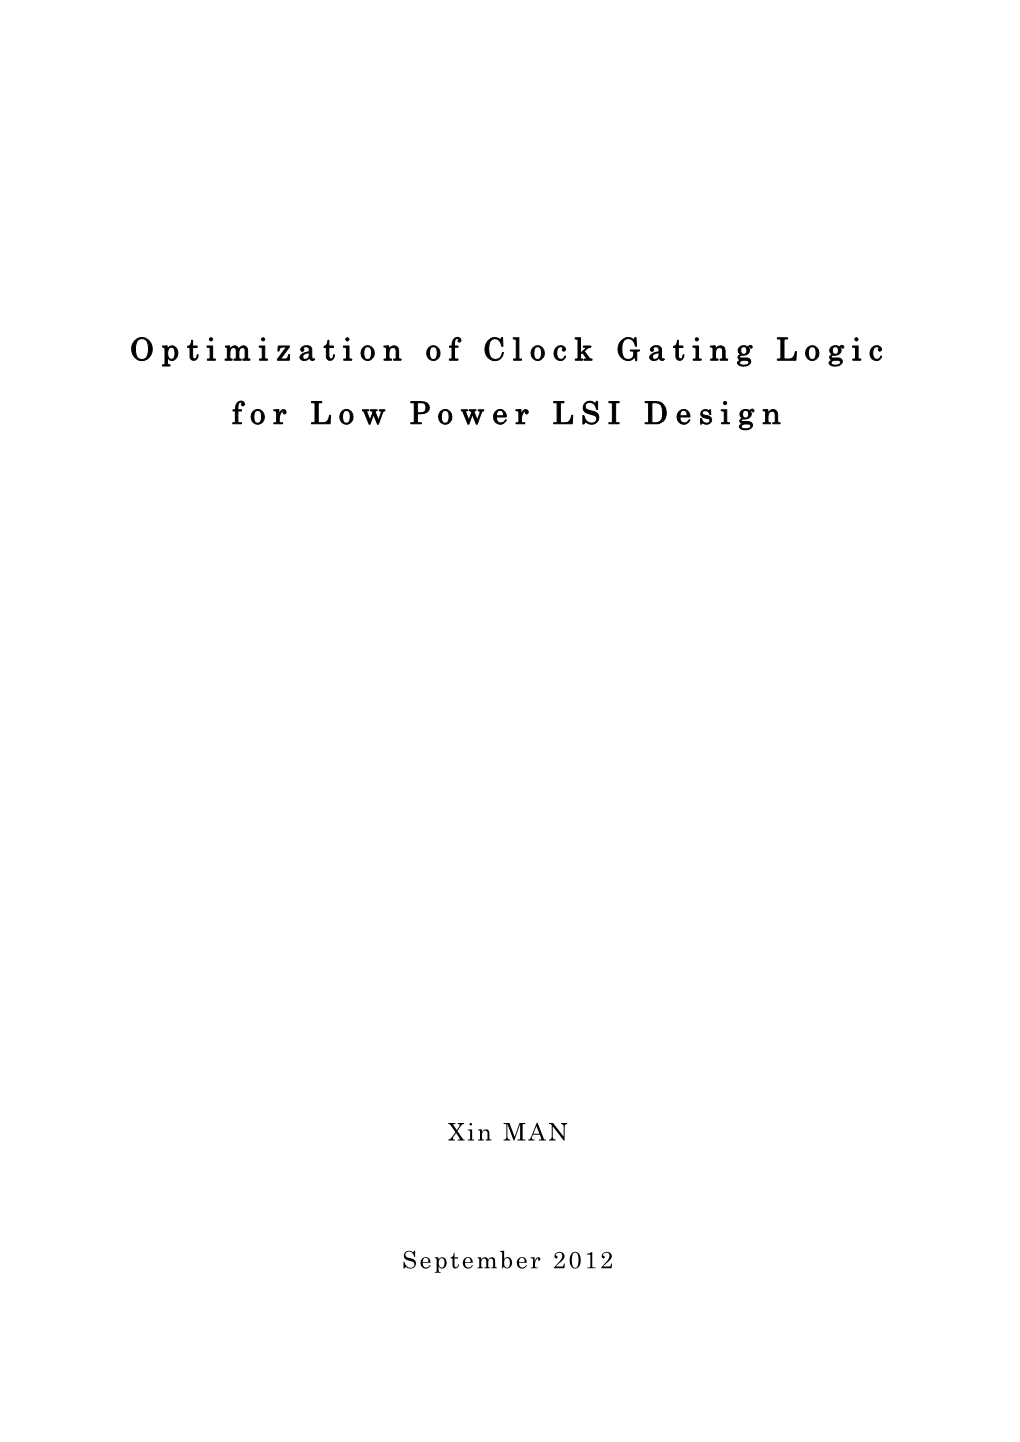 Optimization of Clock Gating Logic for Low Power LSI Design